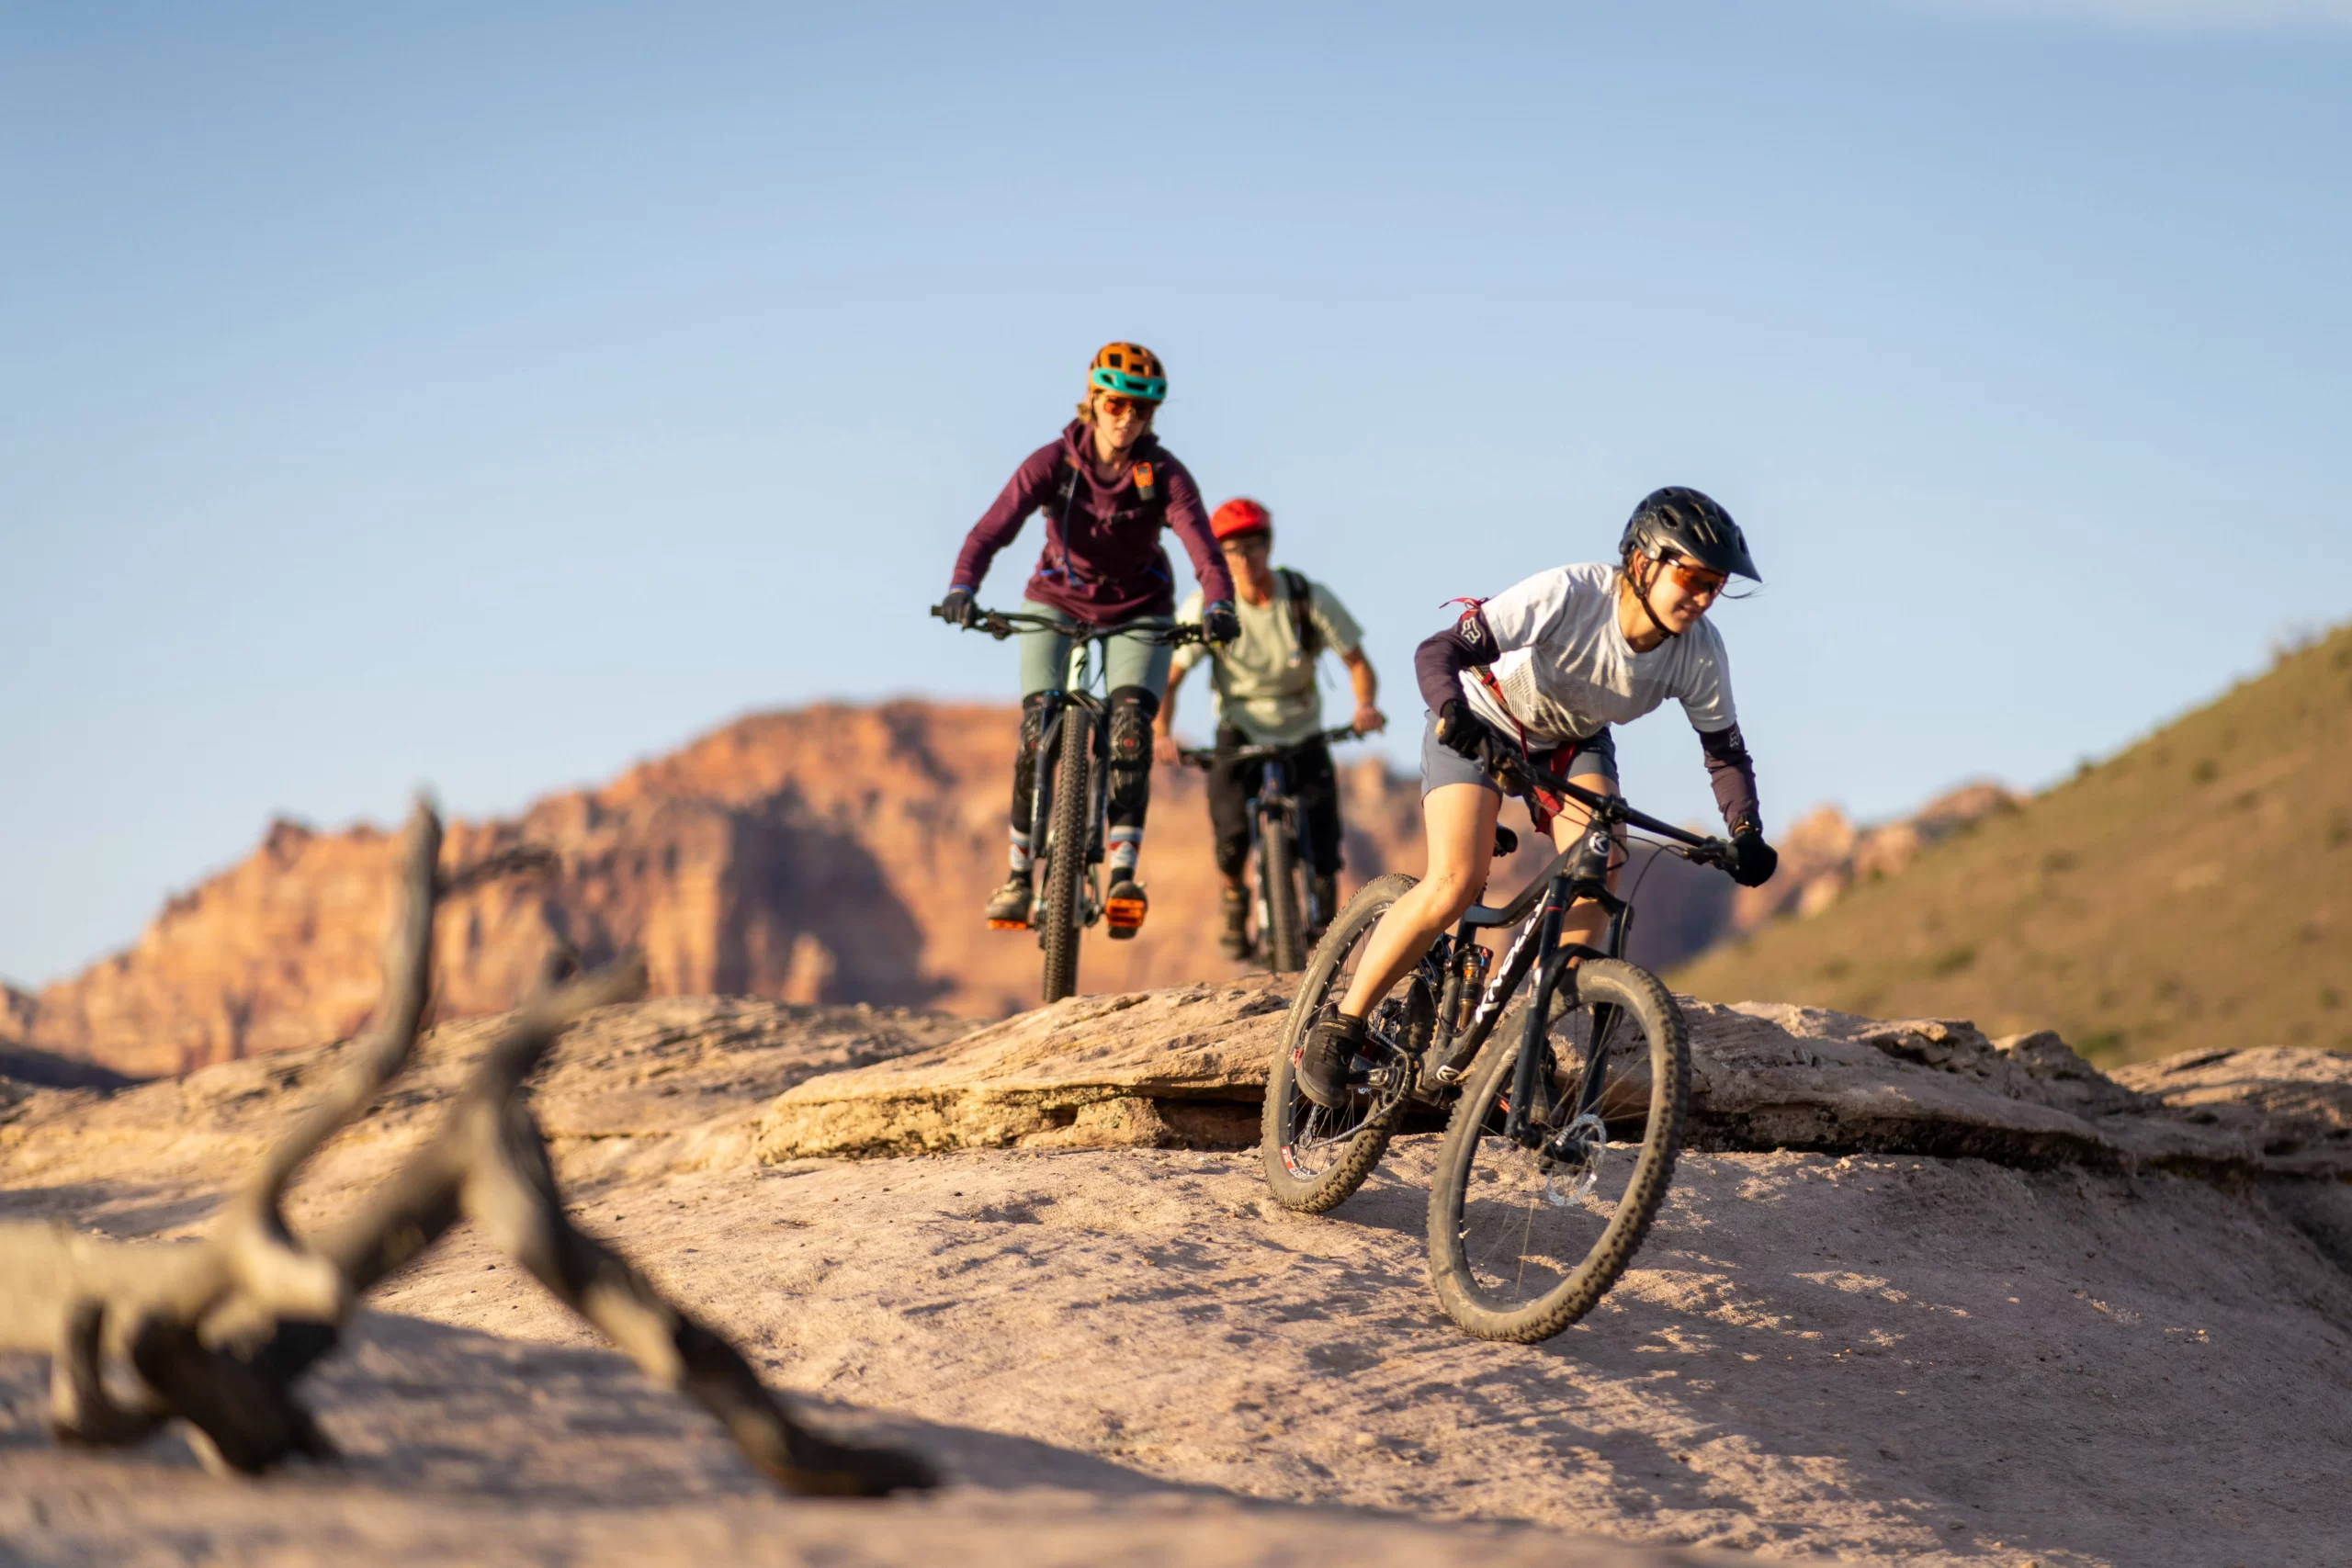 Wild Mesa Courses for slickrock riding